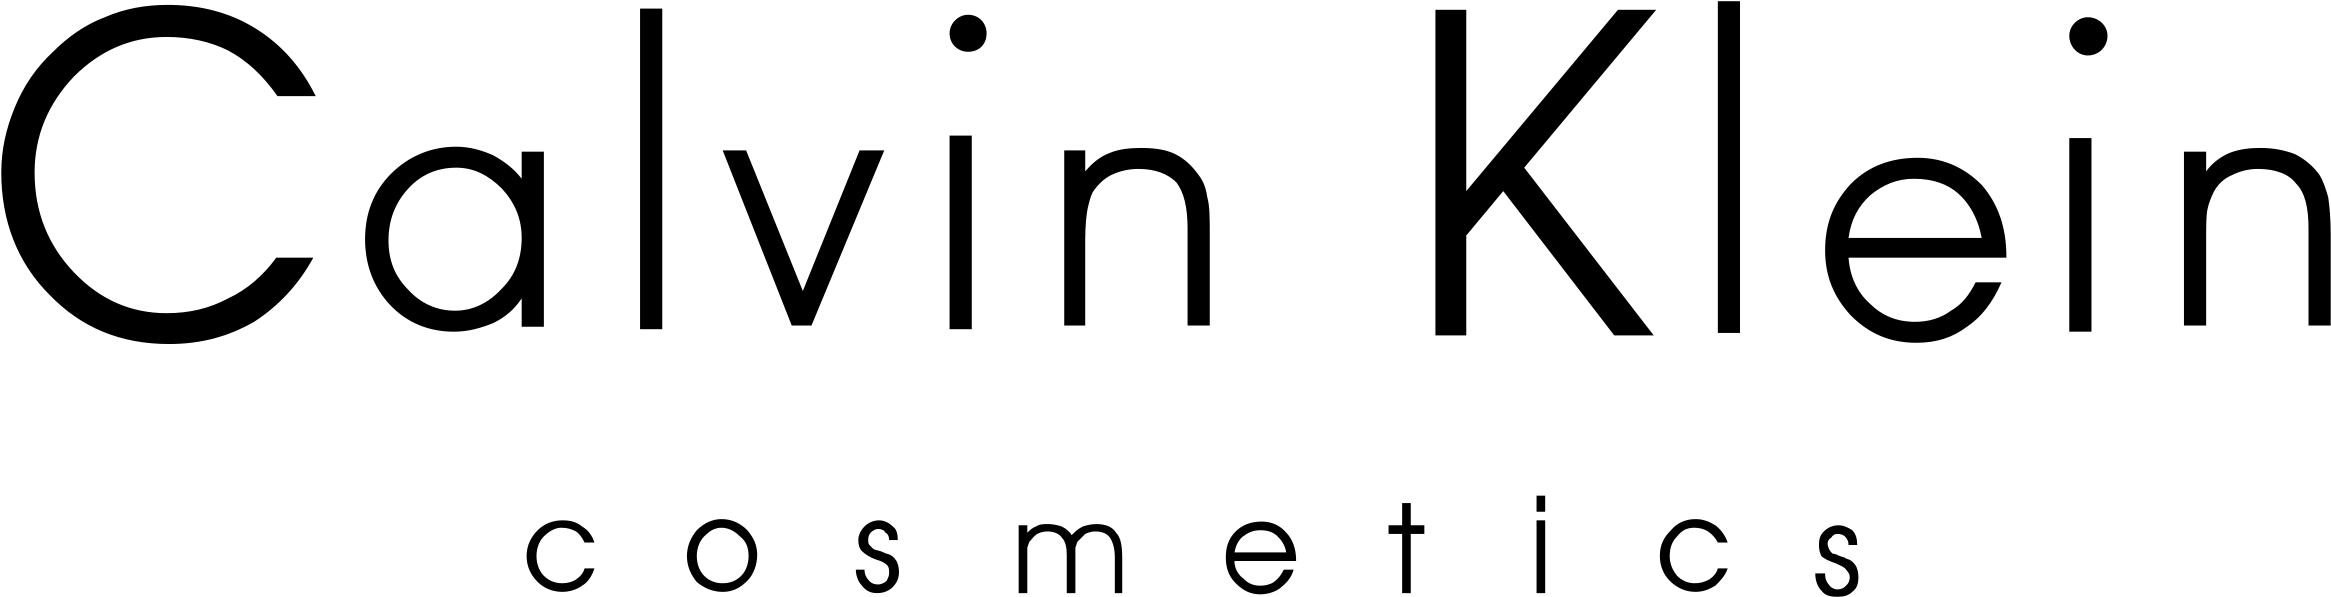 Imagen Transparente del logotipo de Calvin Klein